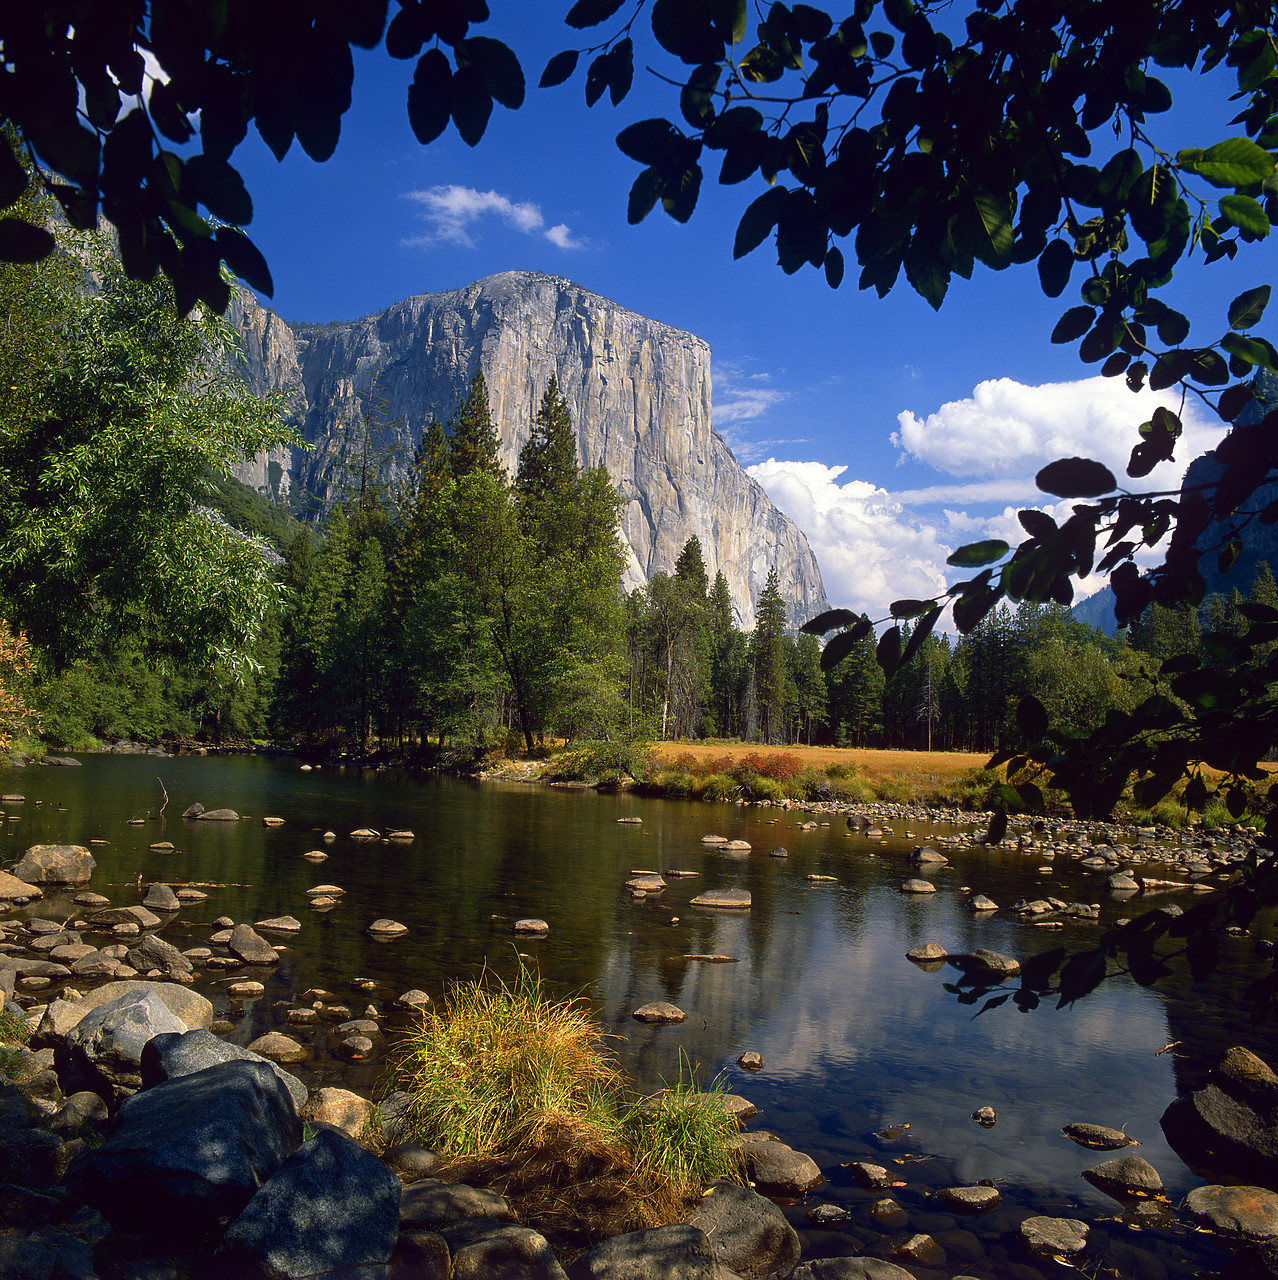 #881598-2 - El Capitan Reflecting in Merced River, Yosemite National Park, California, USA